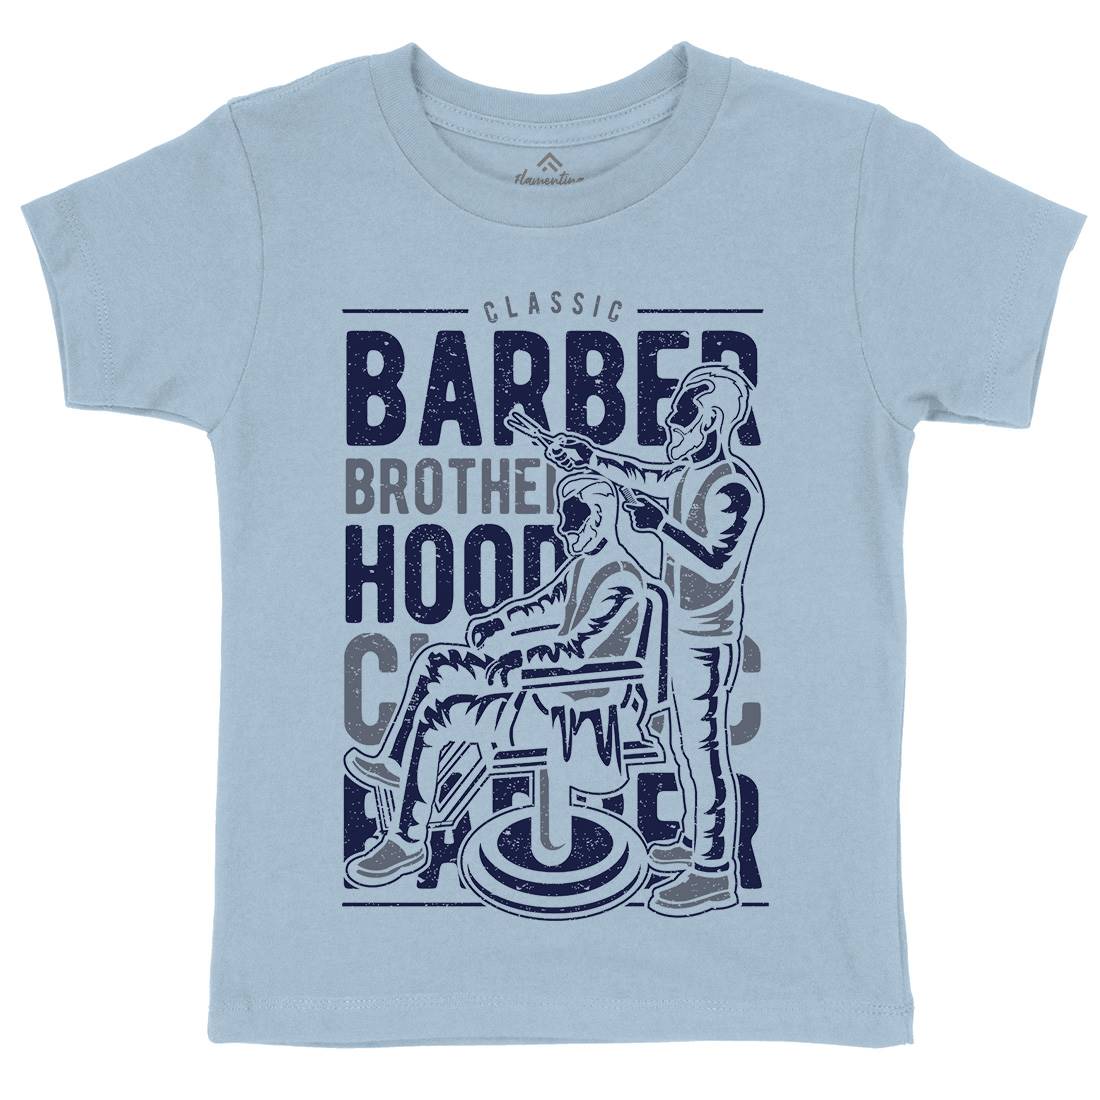 Brotherhood Kids Crew Neck T-Shirt Barber A009